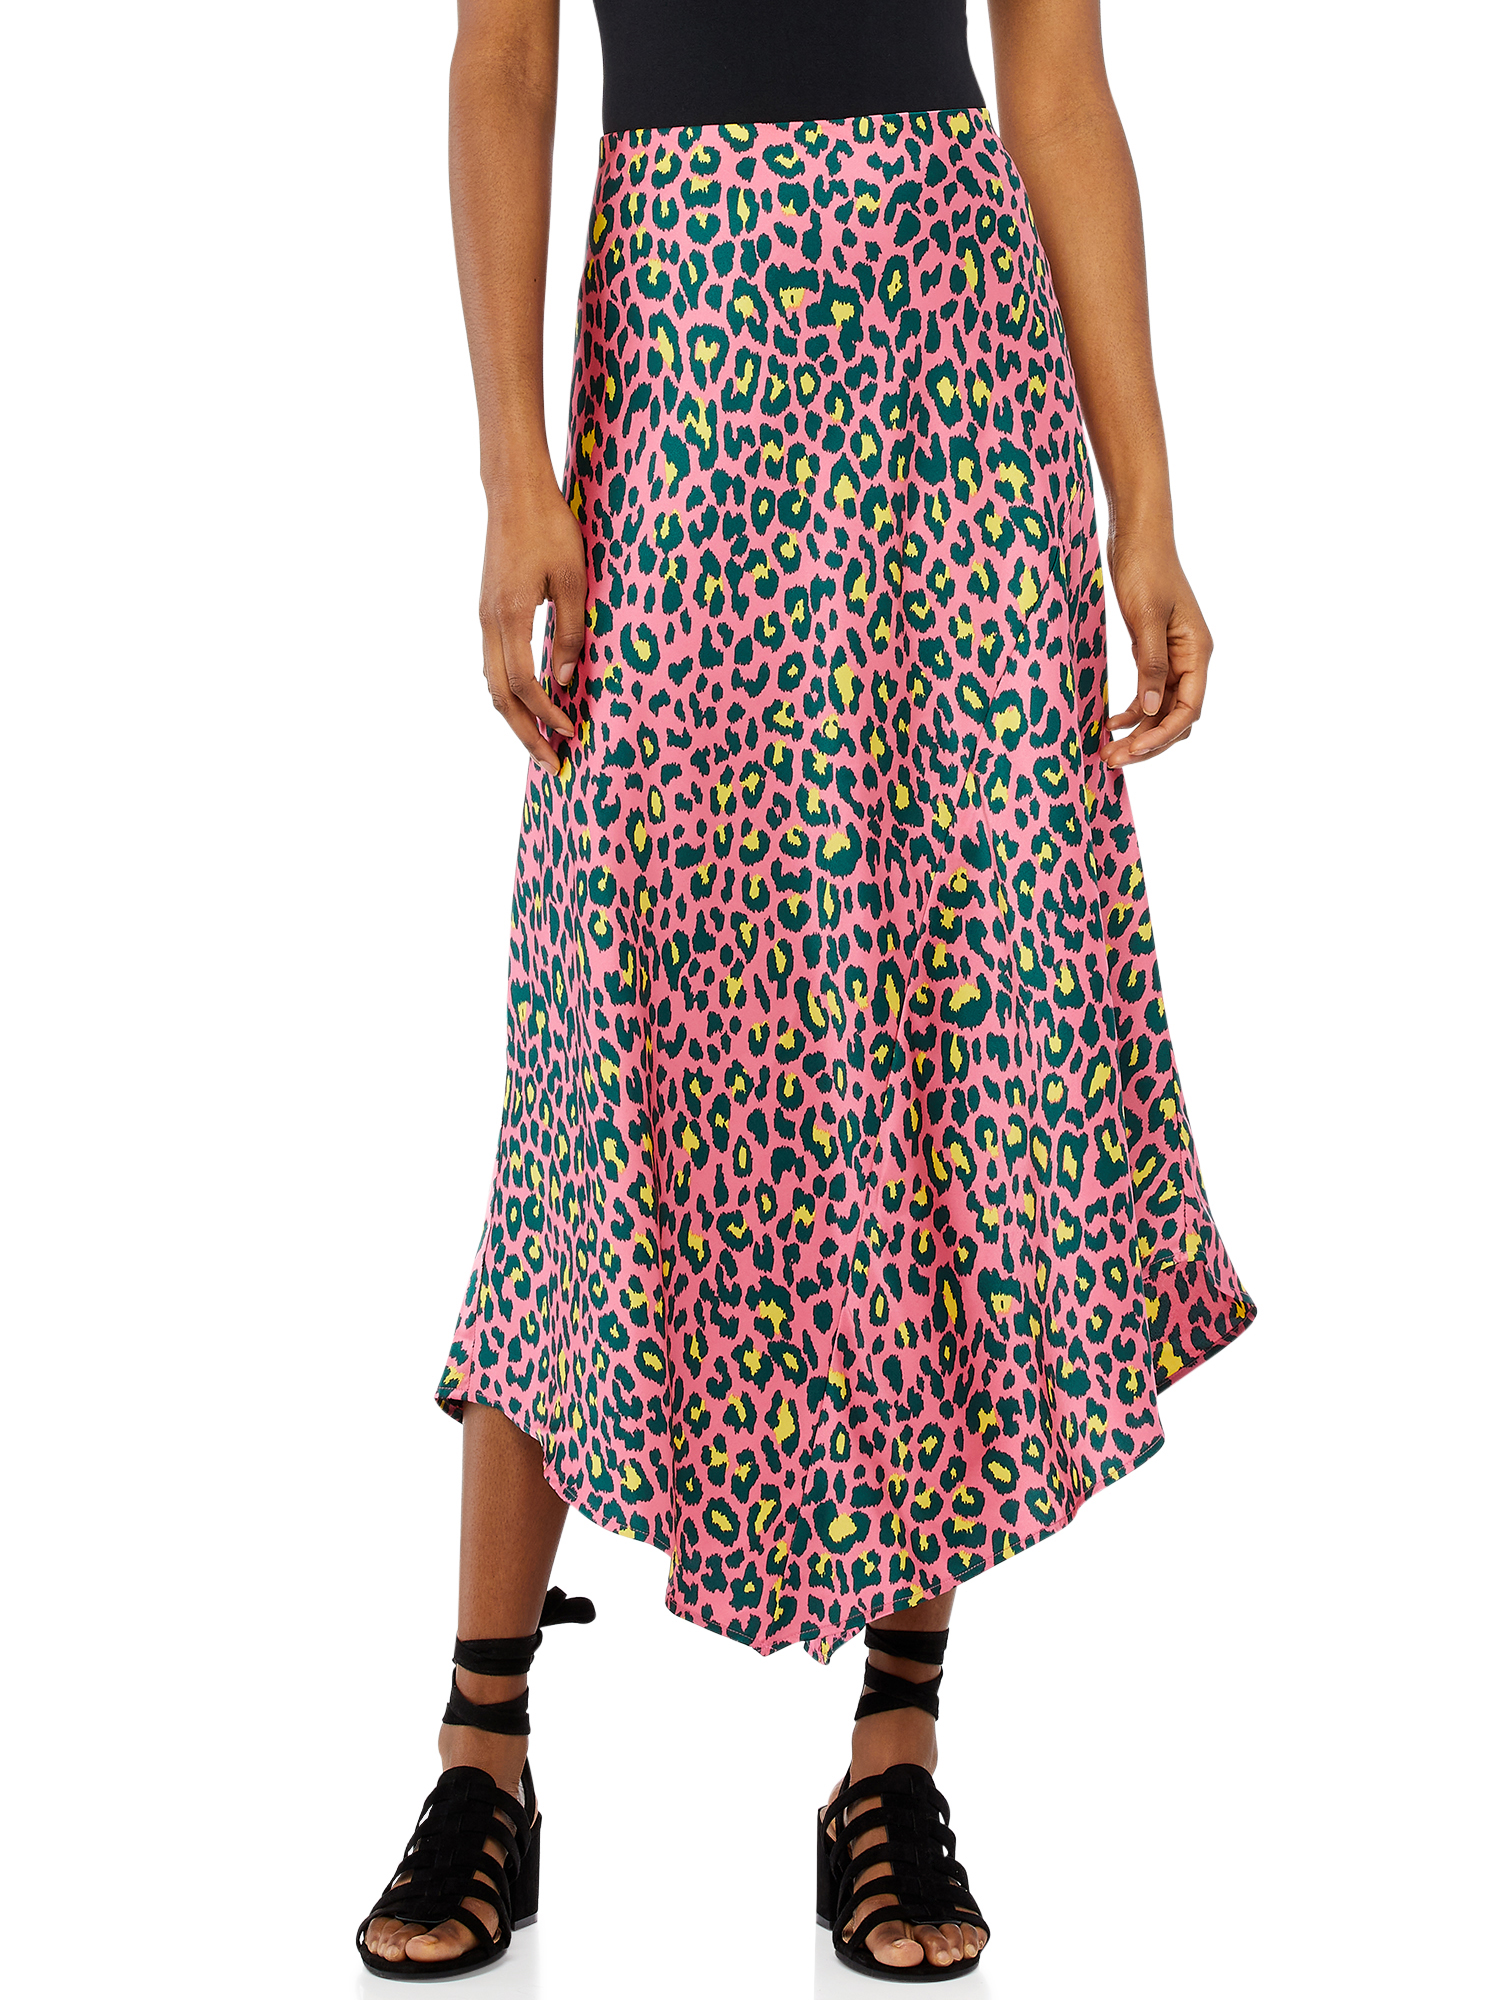 Scoop Women’s Asymmetric Skirt - image 1 of 6